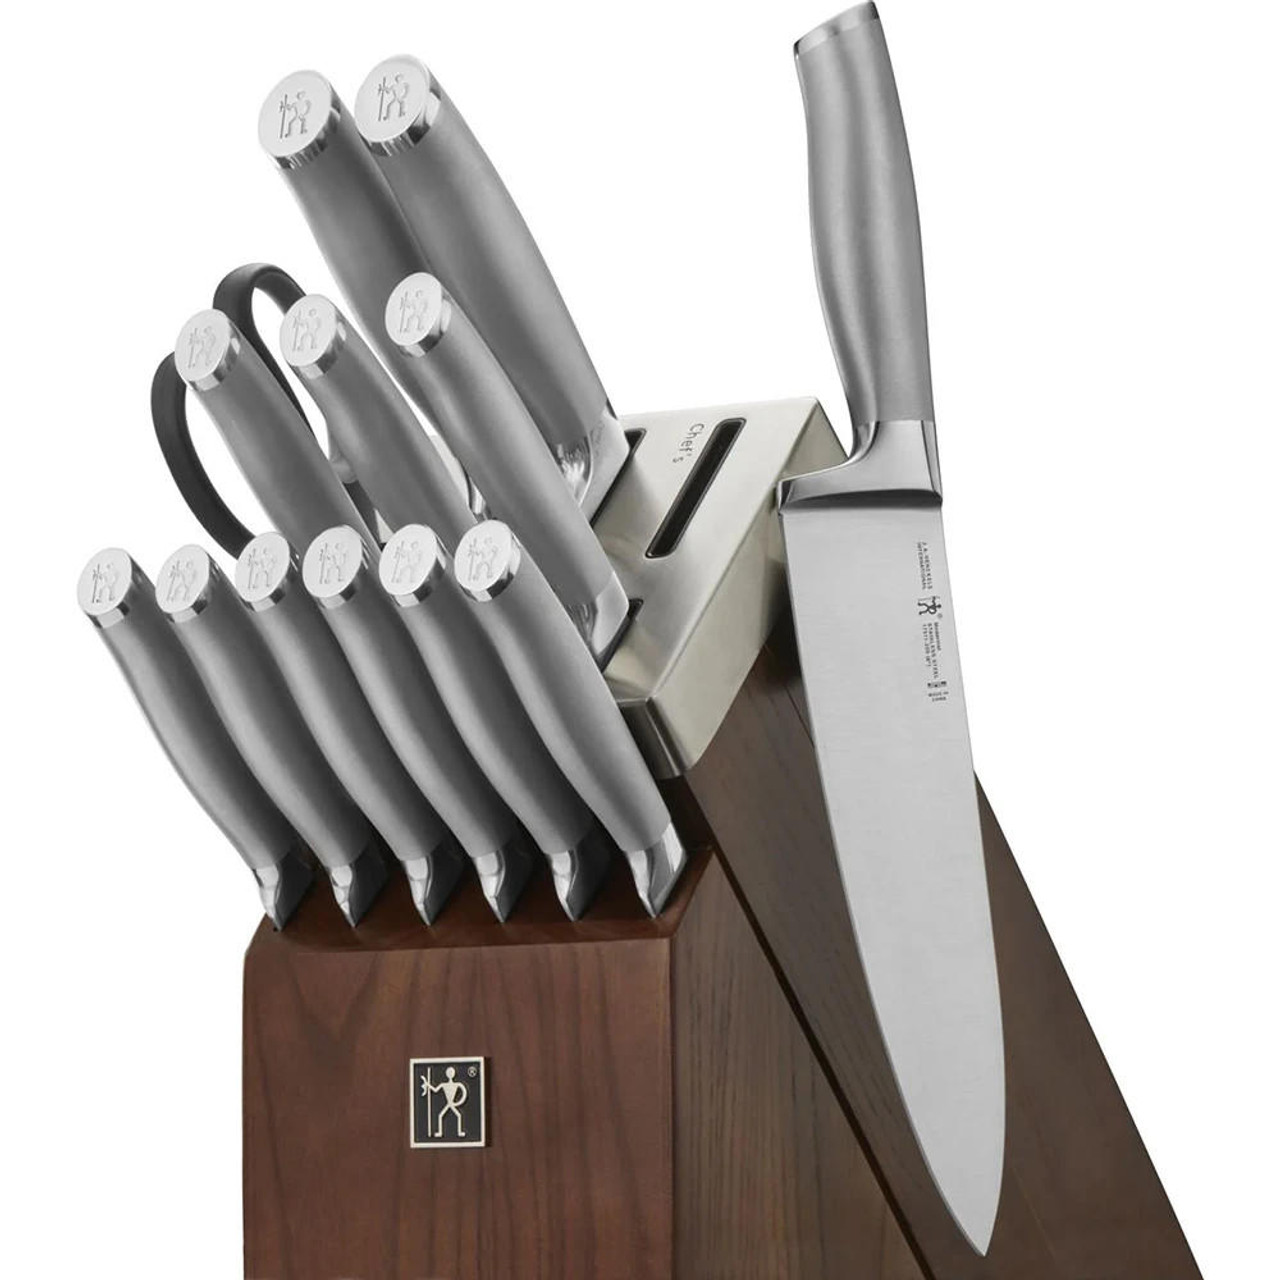  Henckels Precision Modernist 14 Piece Knife Set with Self Sharpening Wood Block 